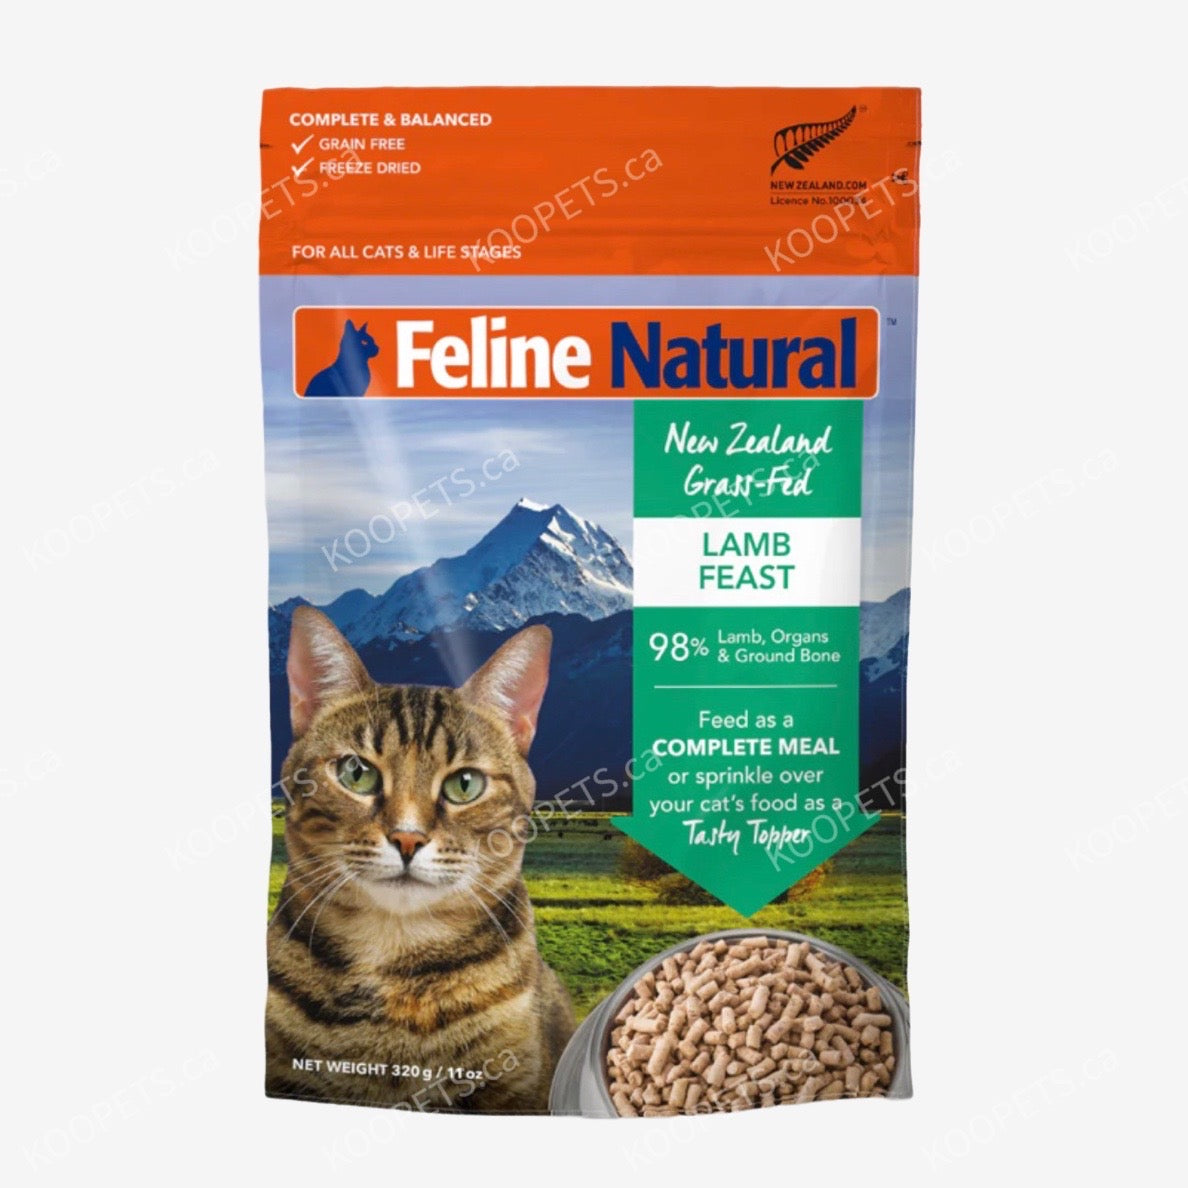 Feline Natural | Freeze-dried Cat Food